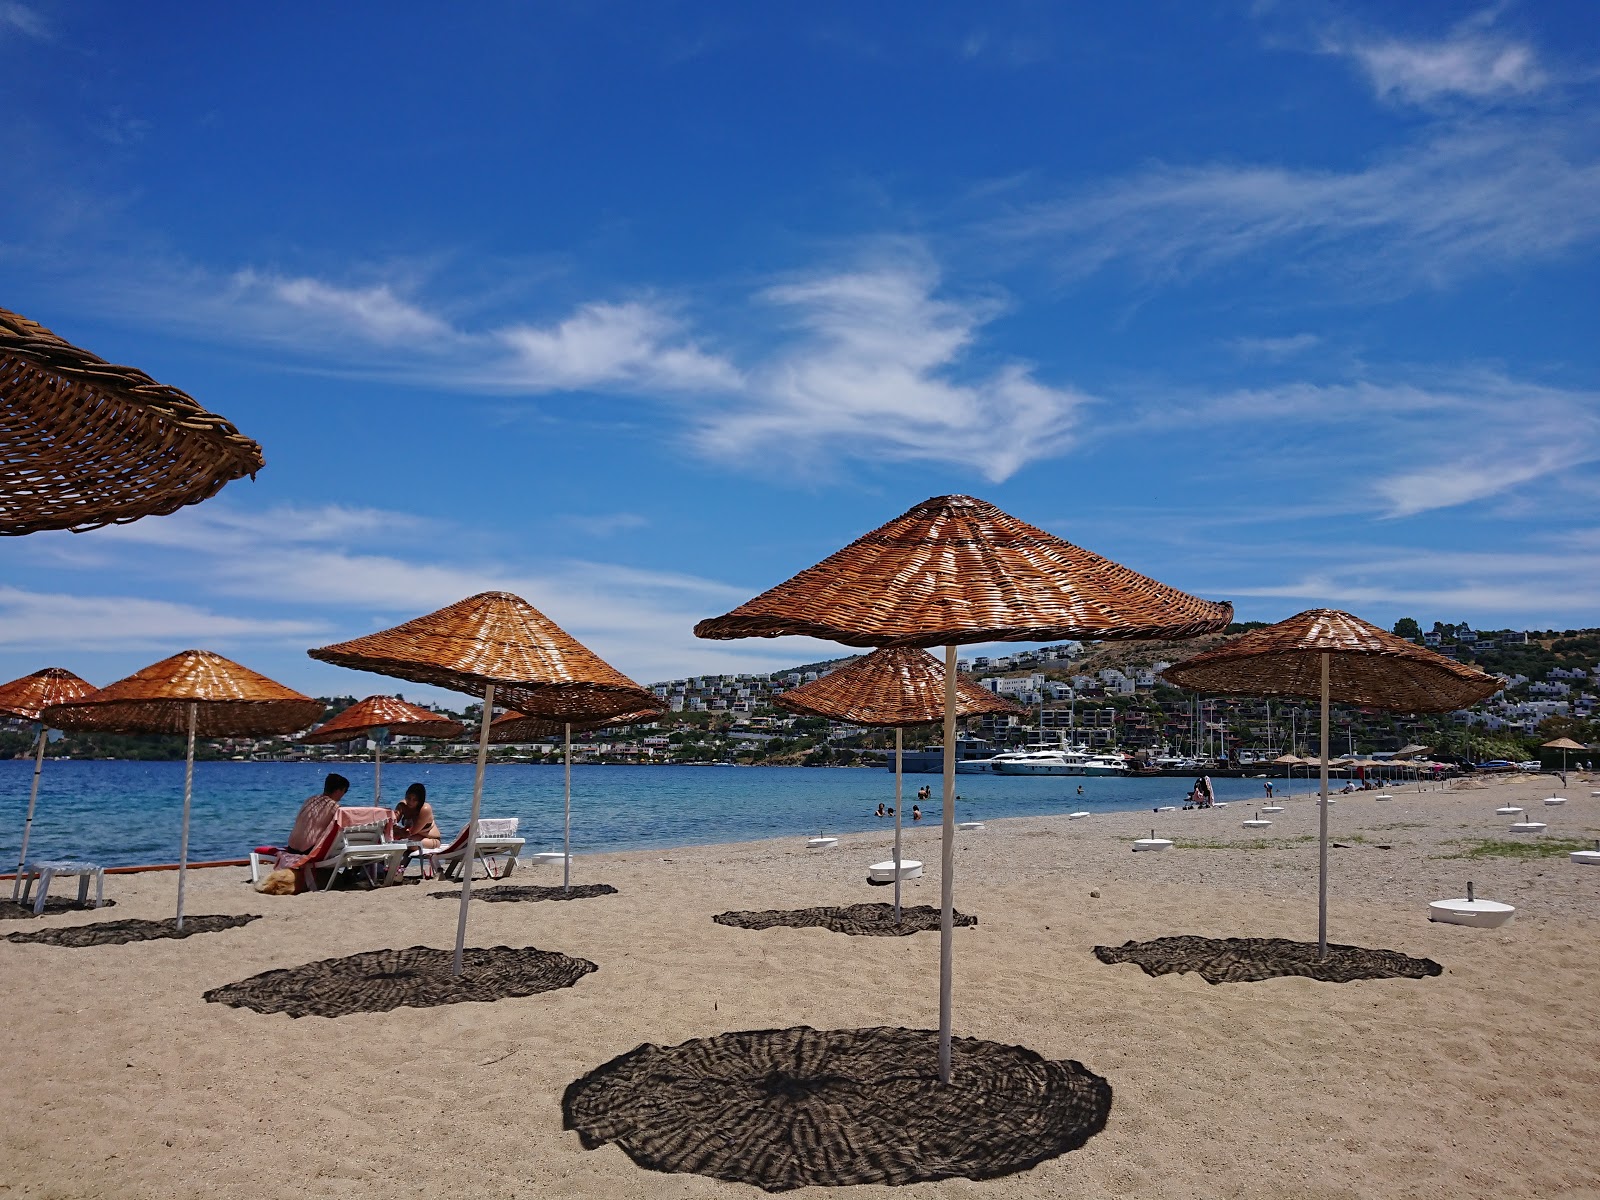 Fotografie cu Gundogan main beach și așezarea